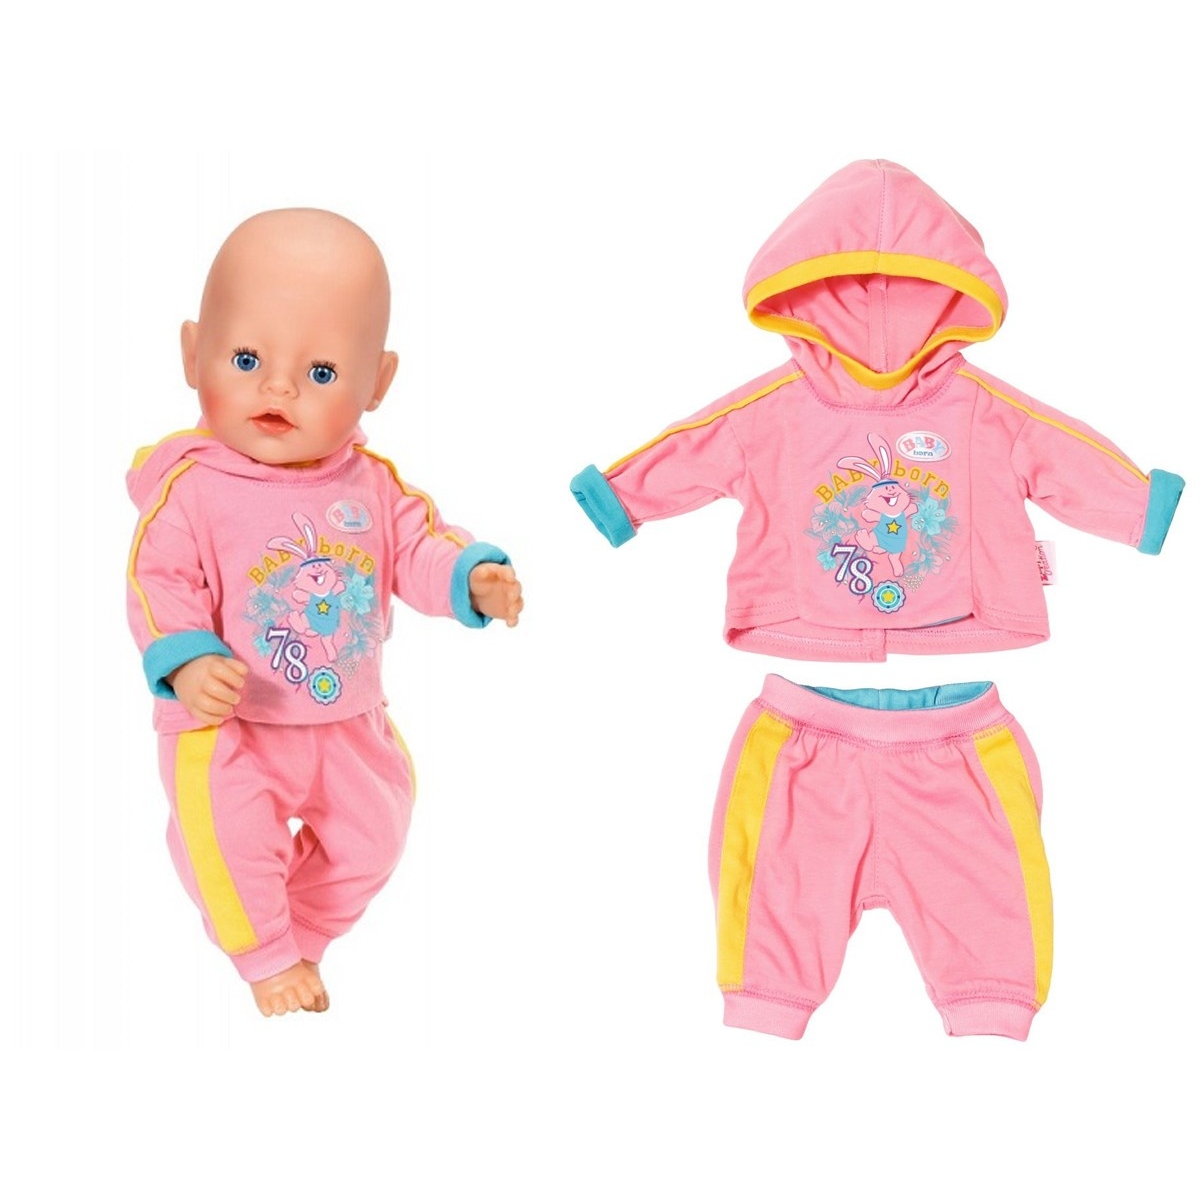 Сайт бебон бибон знакомств моя страница. Спортивный костюм для бейби Борн. Кукла Беби Борн. Zapf Creation одежда для куклы Baby born 824559. Беби боны Беби боны Беби боны.